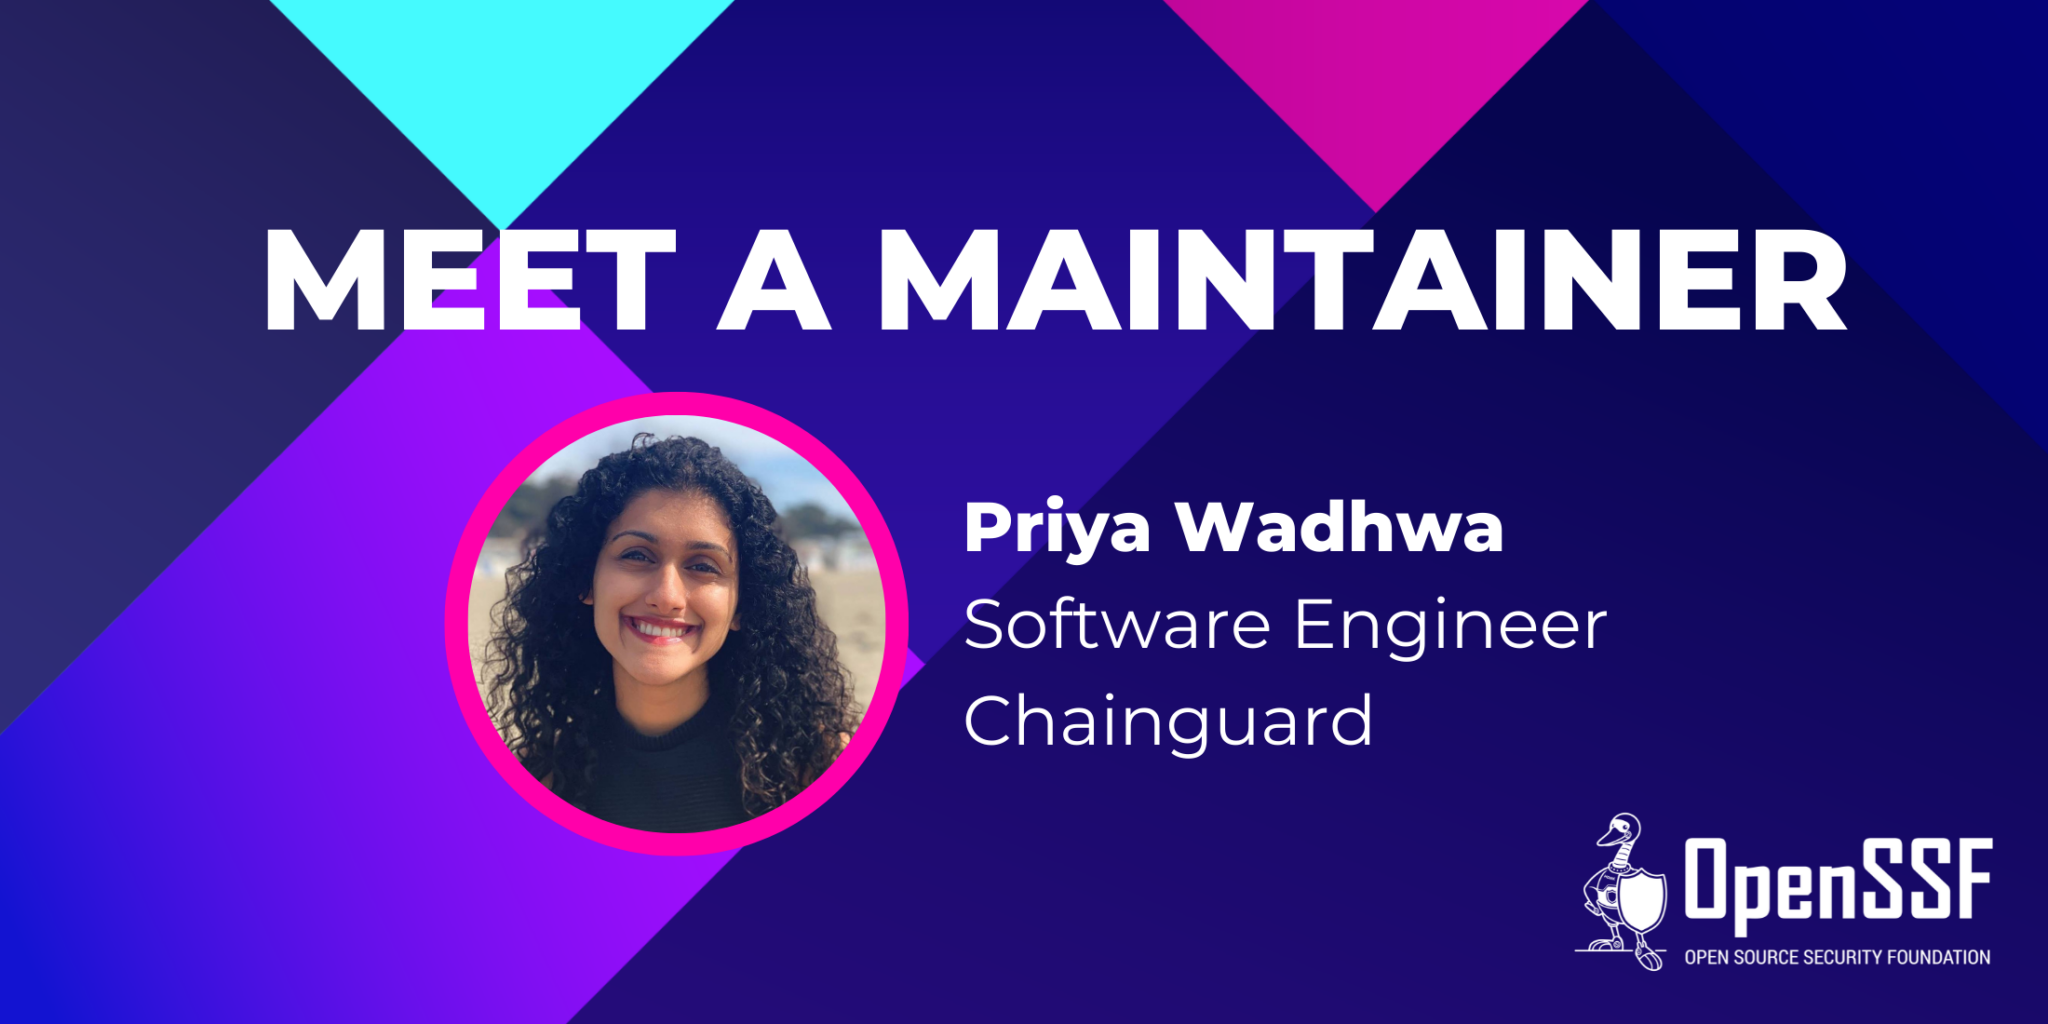 MEET A MAINTAINER Priya Wadhwa Chainguard